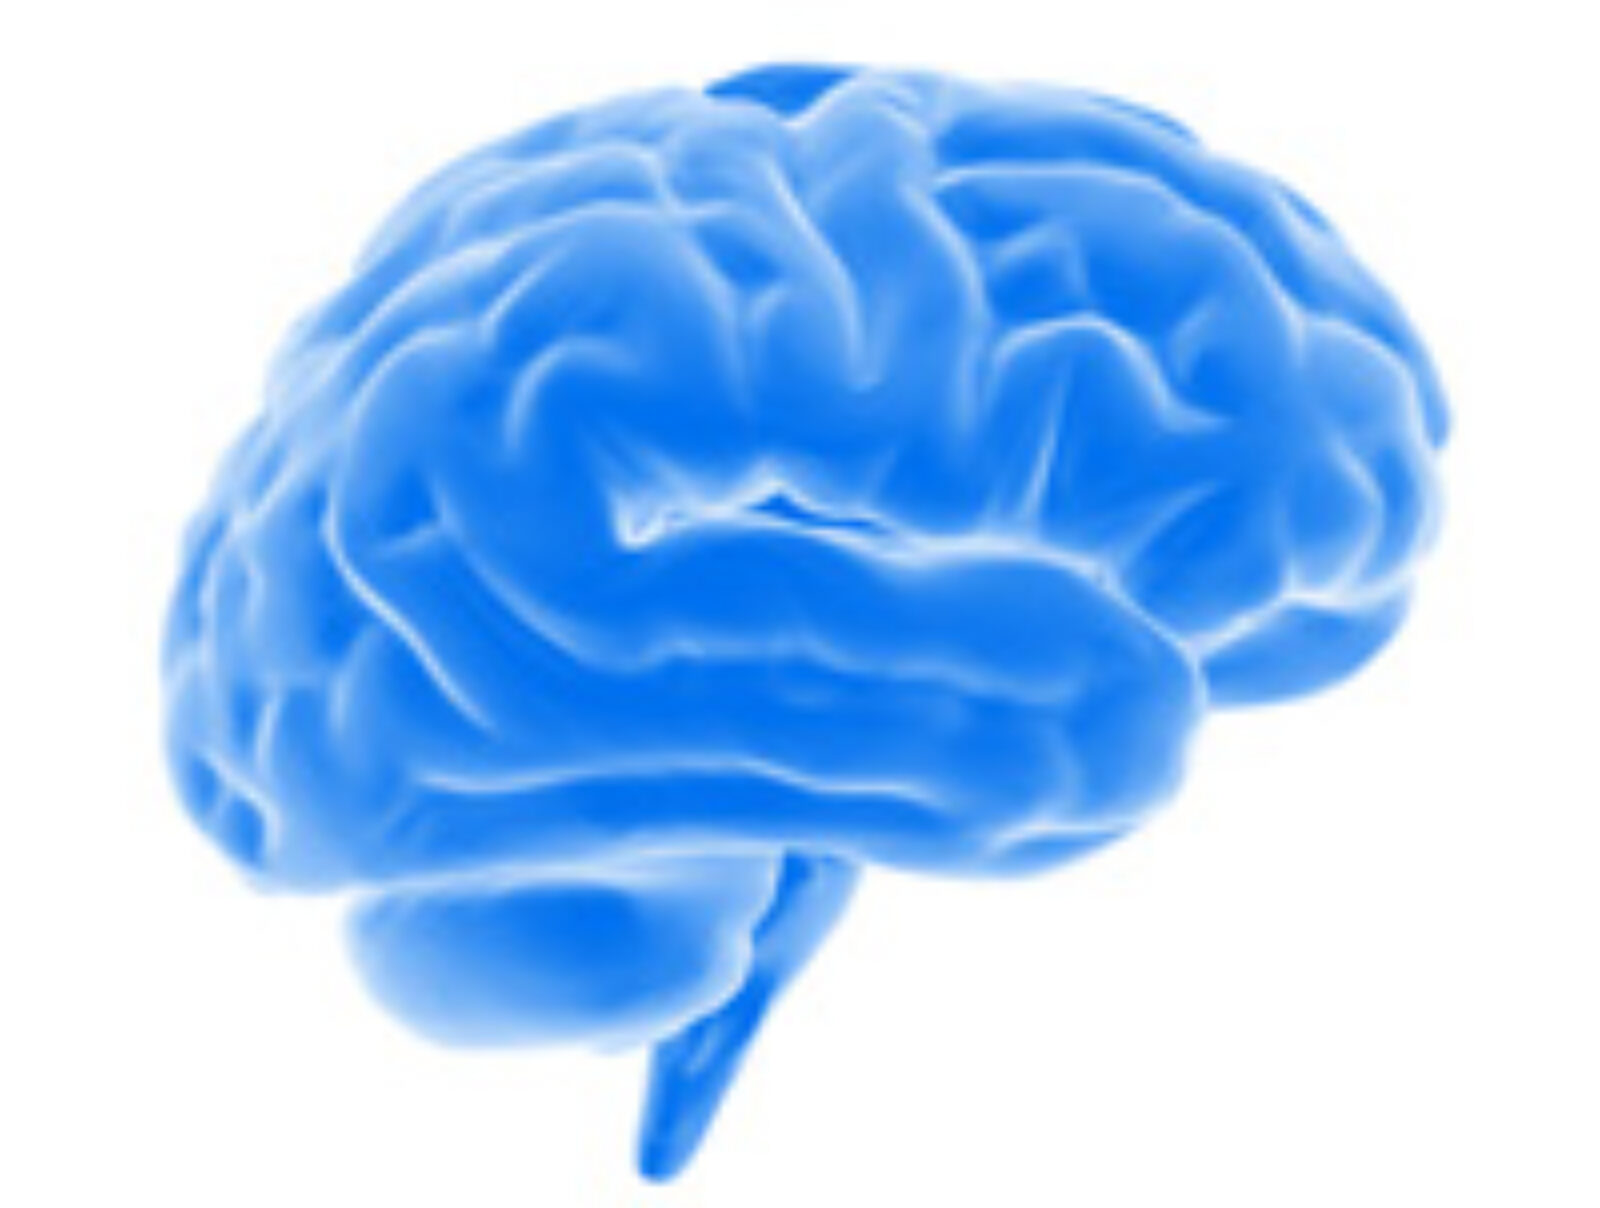 Keystone Symposia: State of the Brain